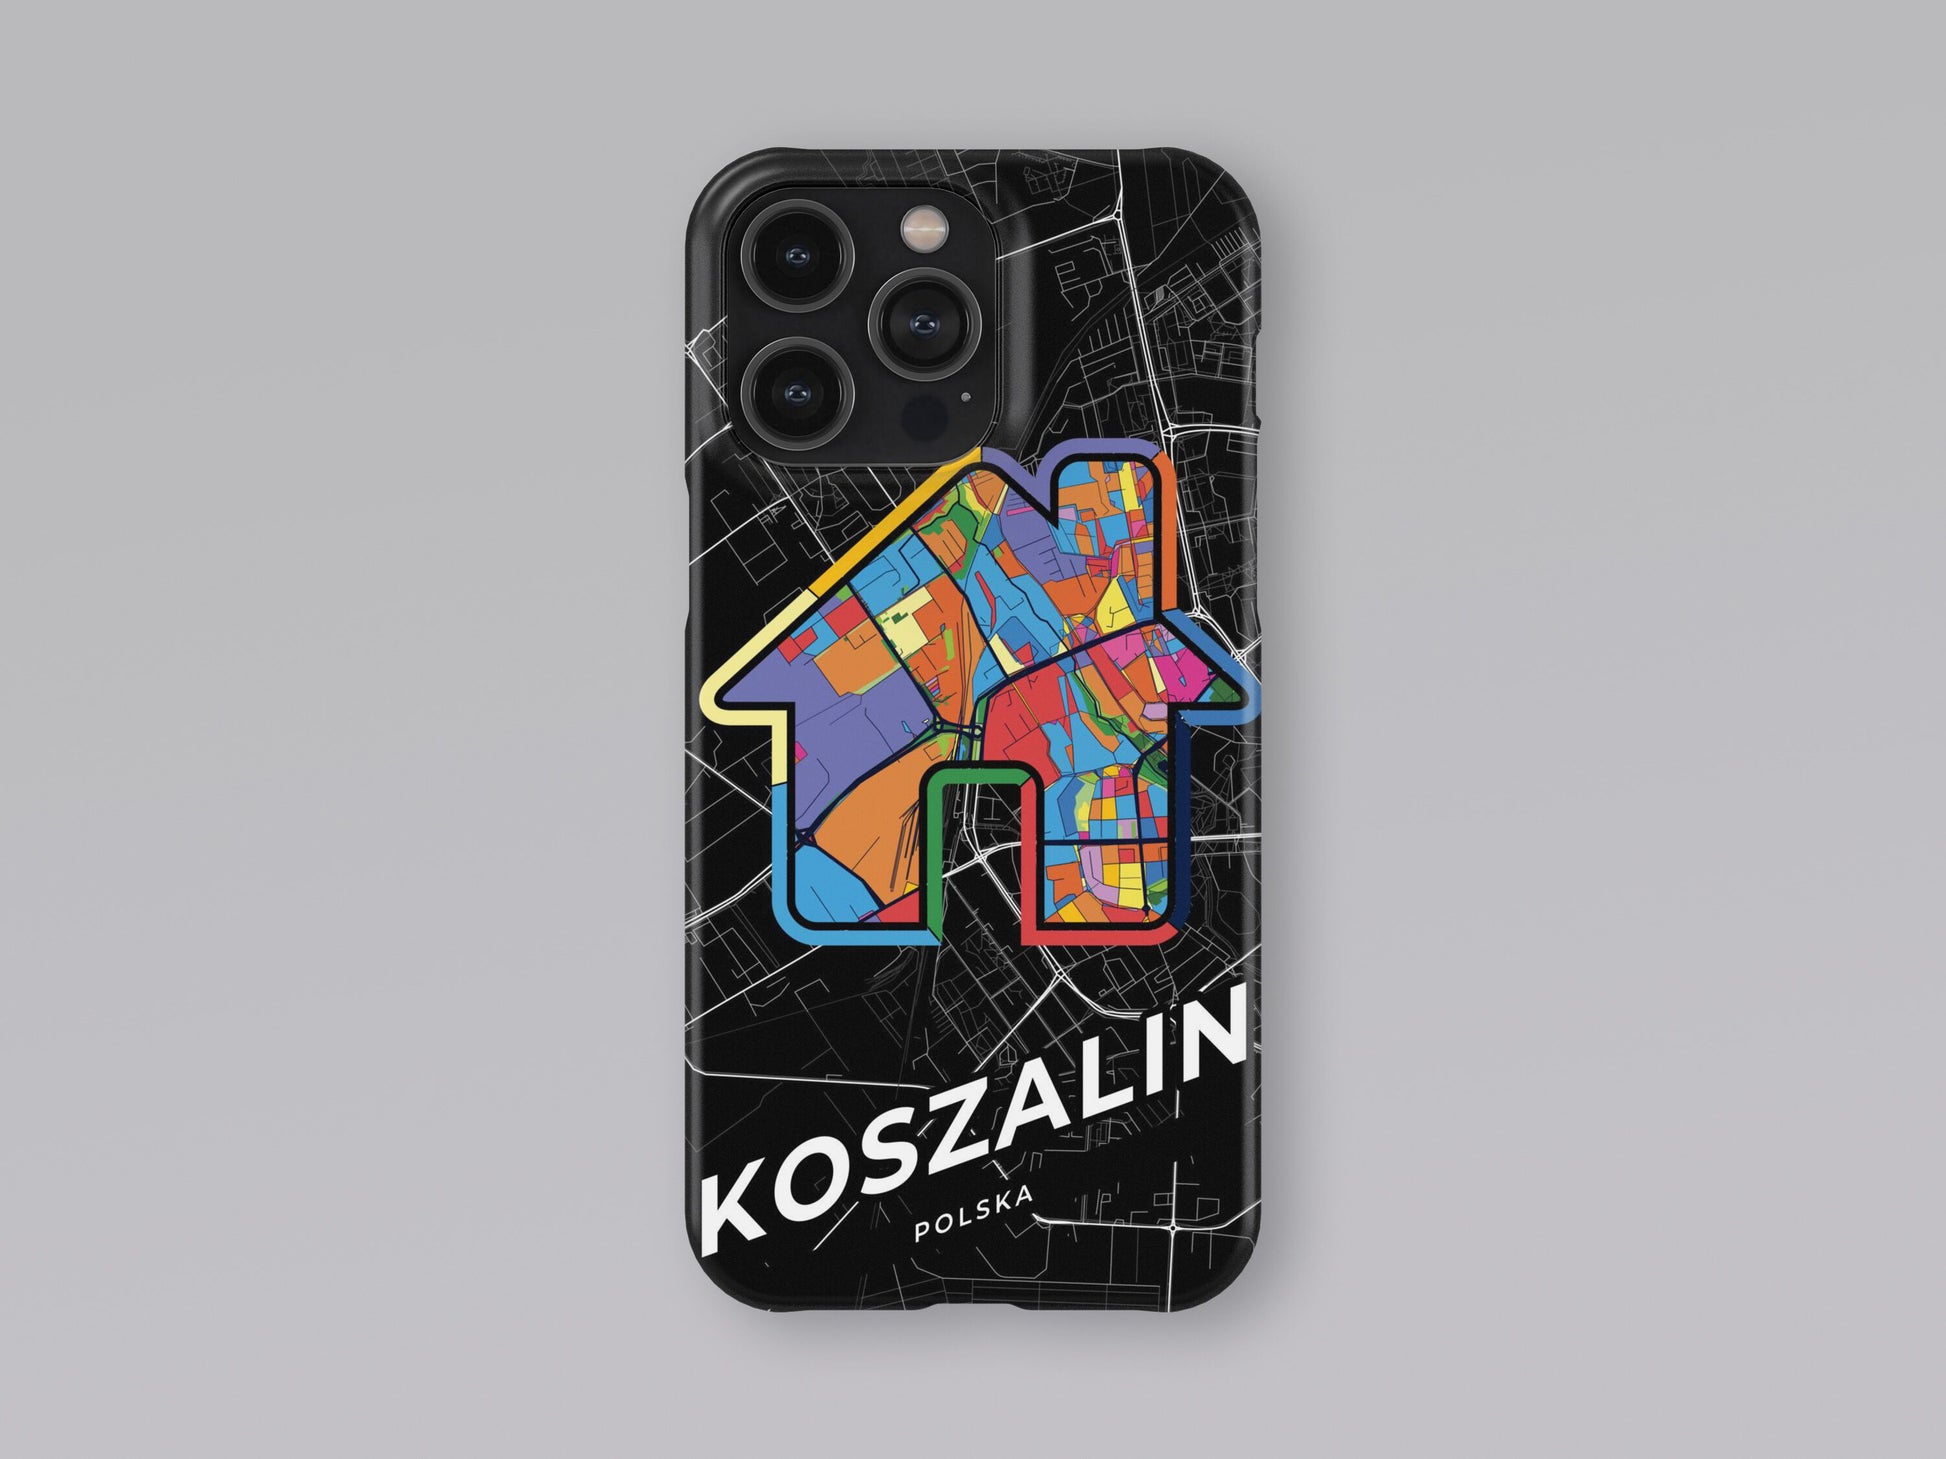 Koszalin Poland slim phone case with colorful icon. Birthday, wedding or housewarming gift. Couple match cases. 3